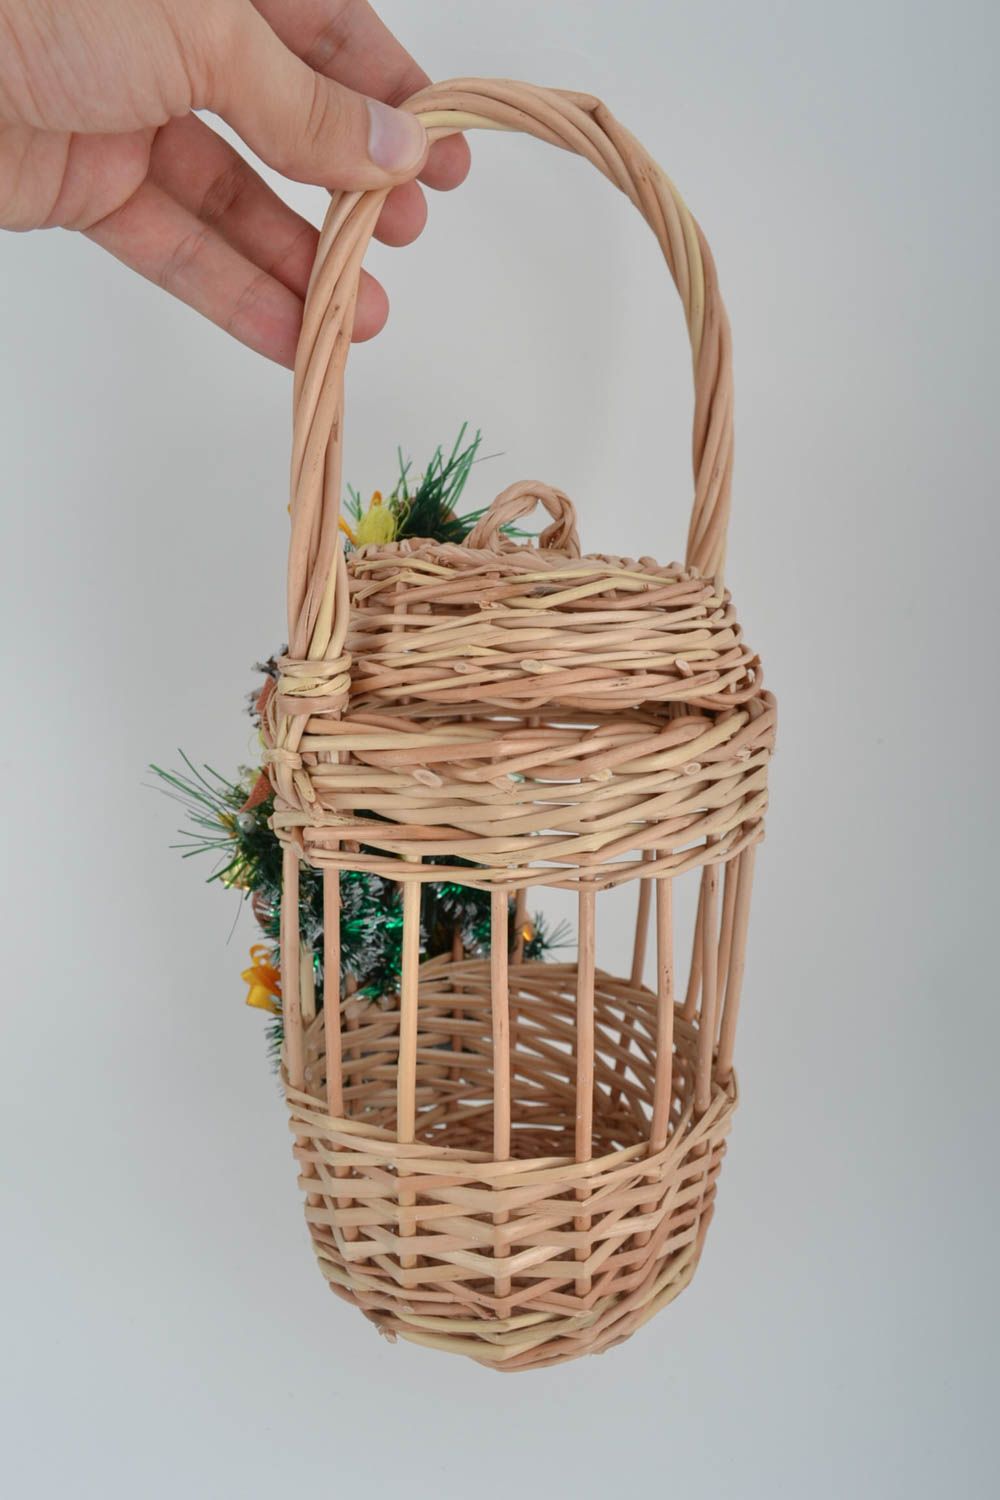 Unusual handmade woven basket designer Easter basket ideas gift ideas photo 5